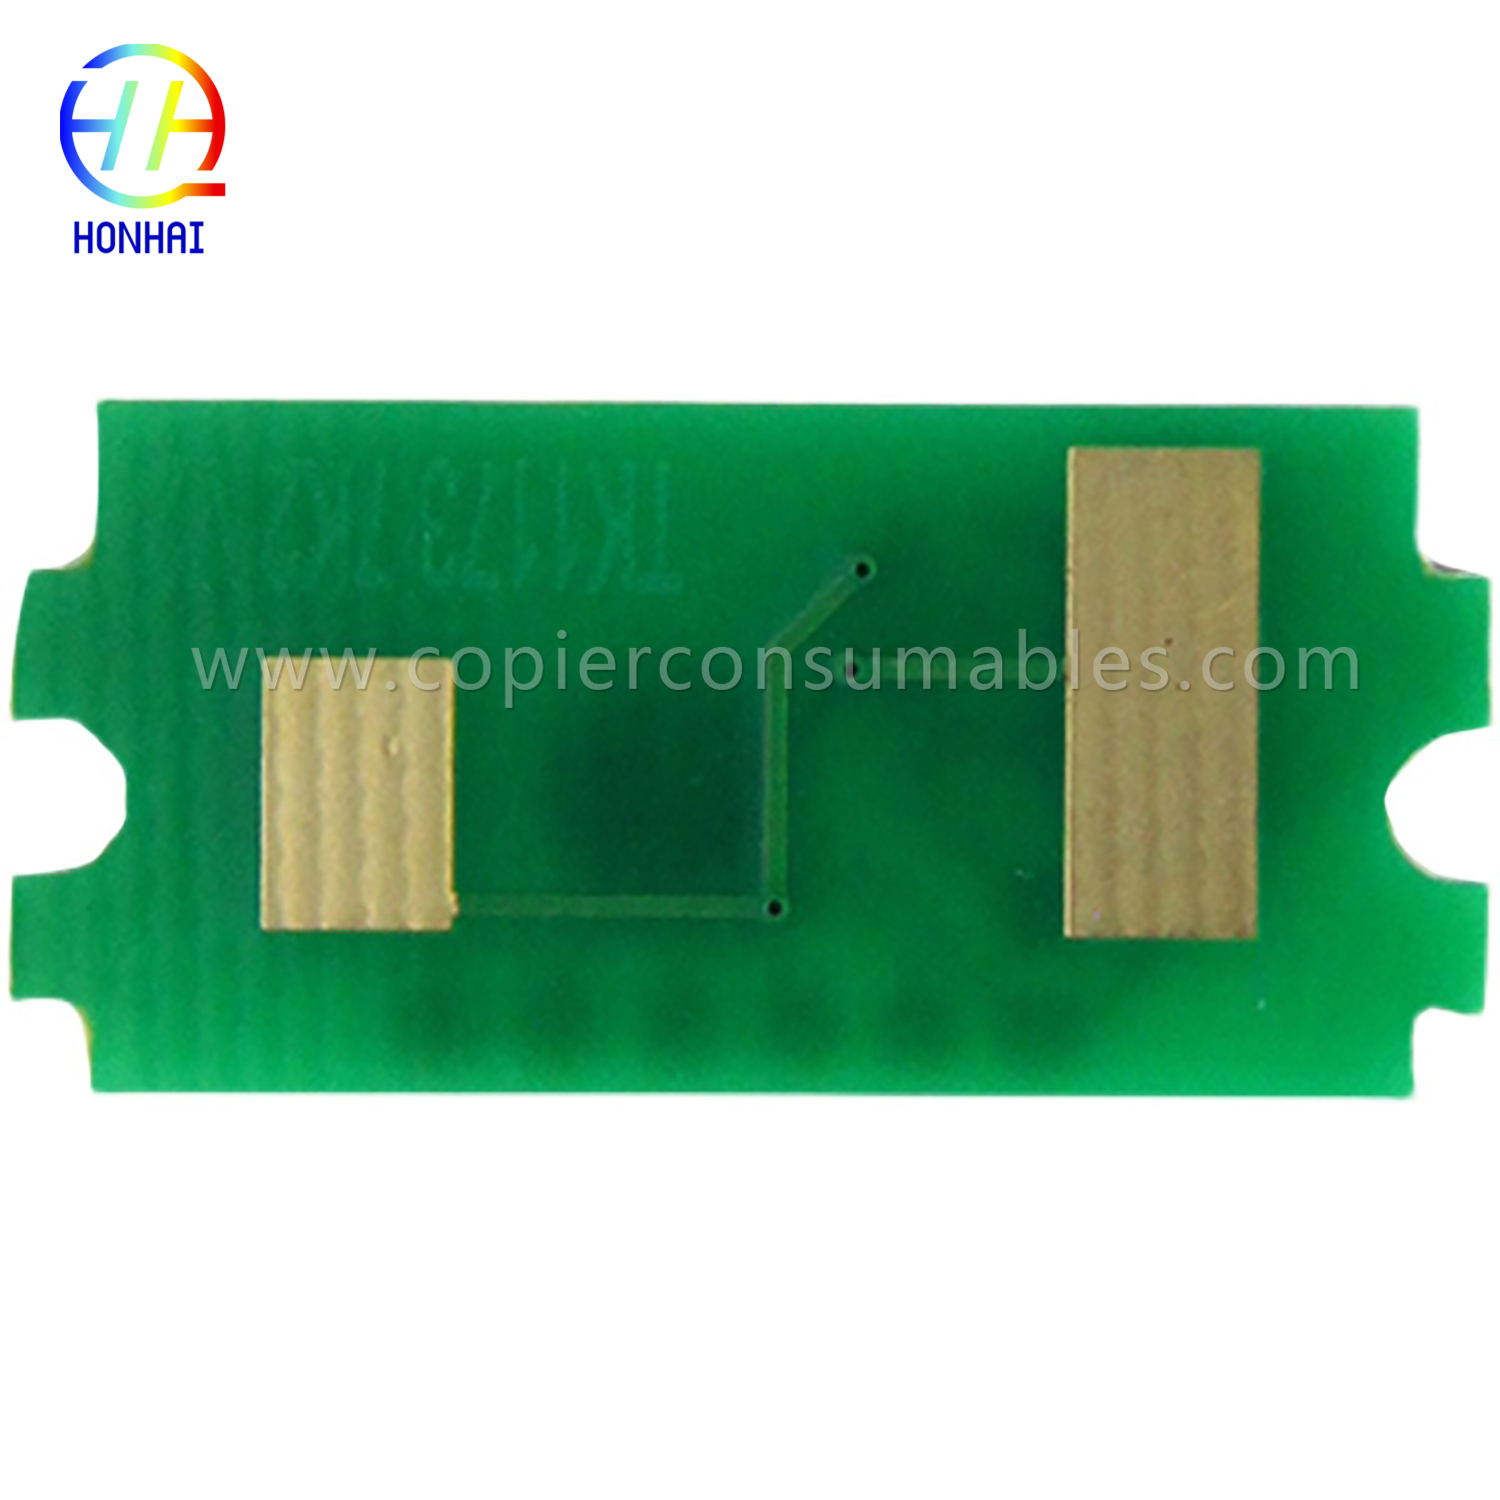 Toner Cartridge Chip for Kyocera Ecosys P2040dn P2040dw (TK-1164) (3) 拷贝